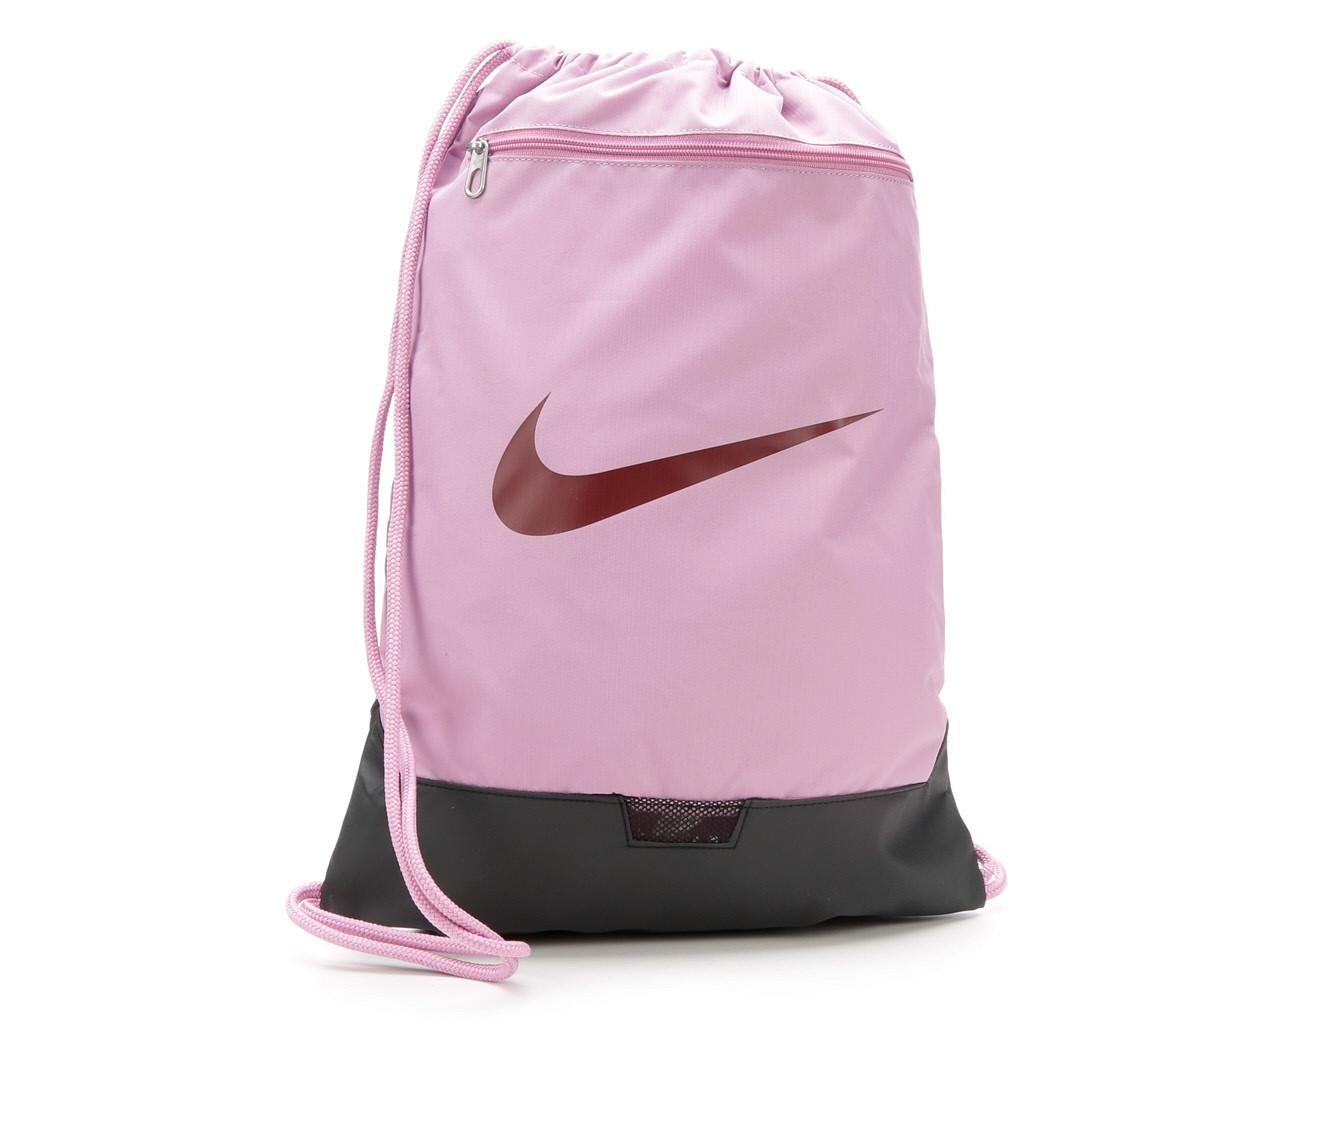 Nike Drawstring Bag Backpack Cinch Sack Teal & Pink Rope Zip Pocket EUC!